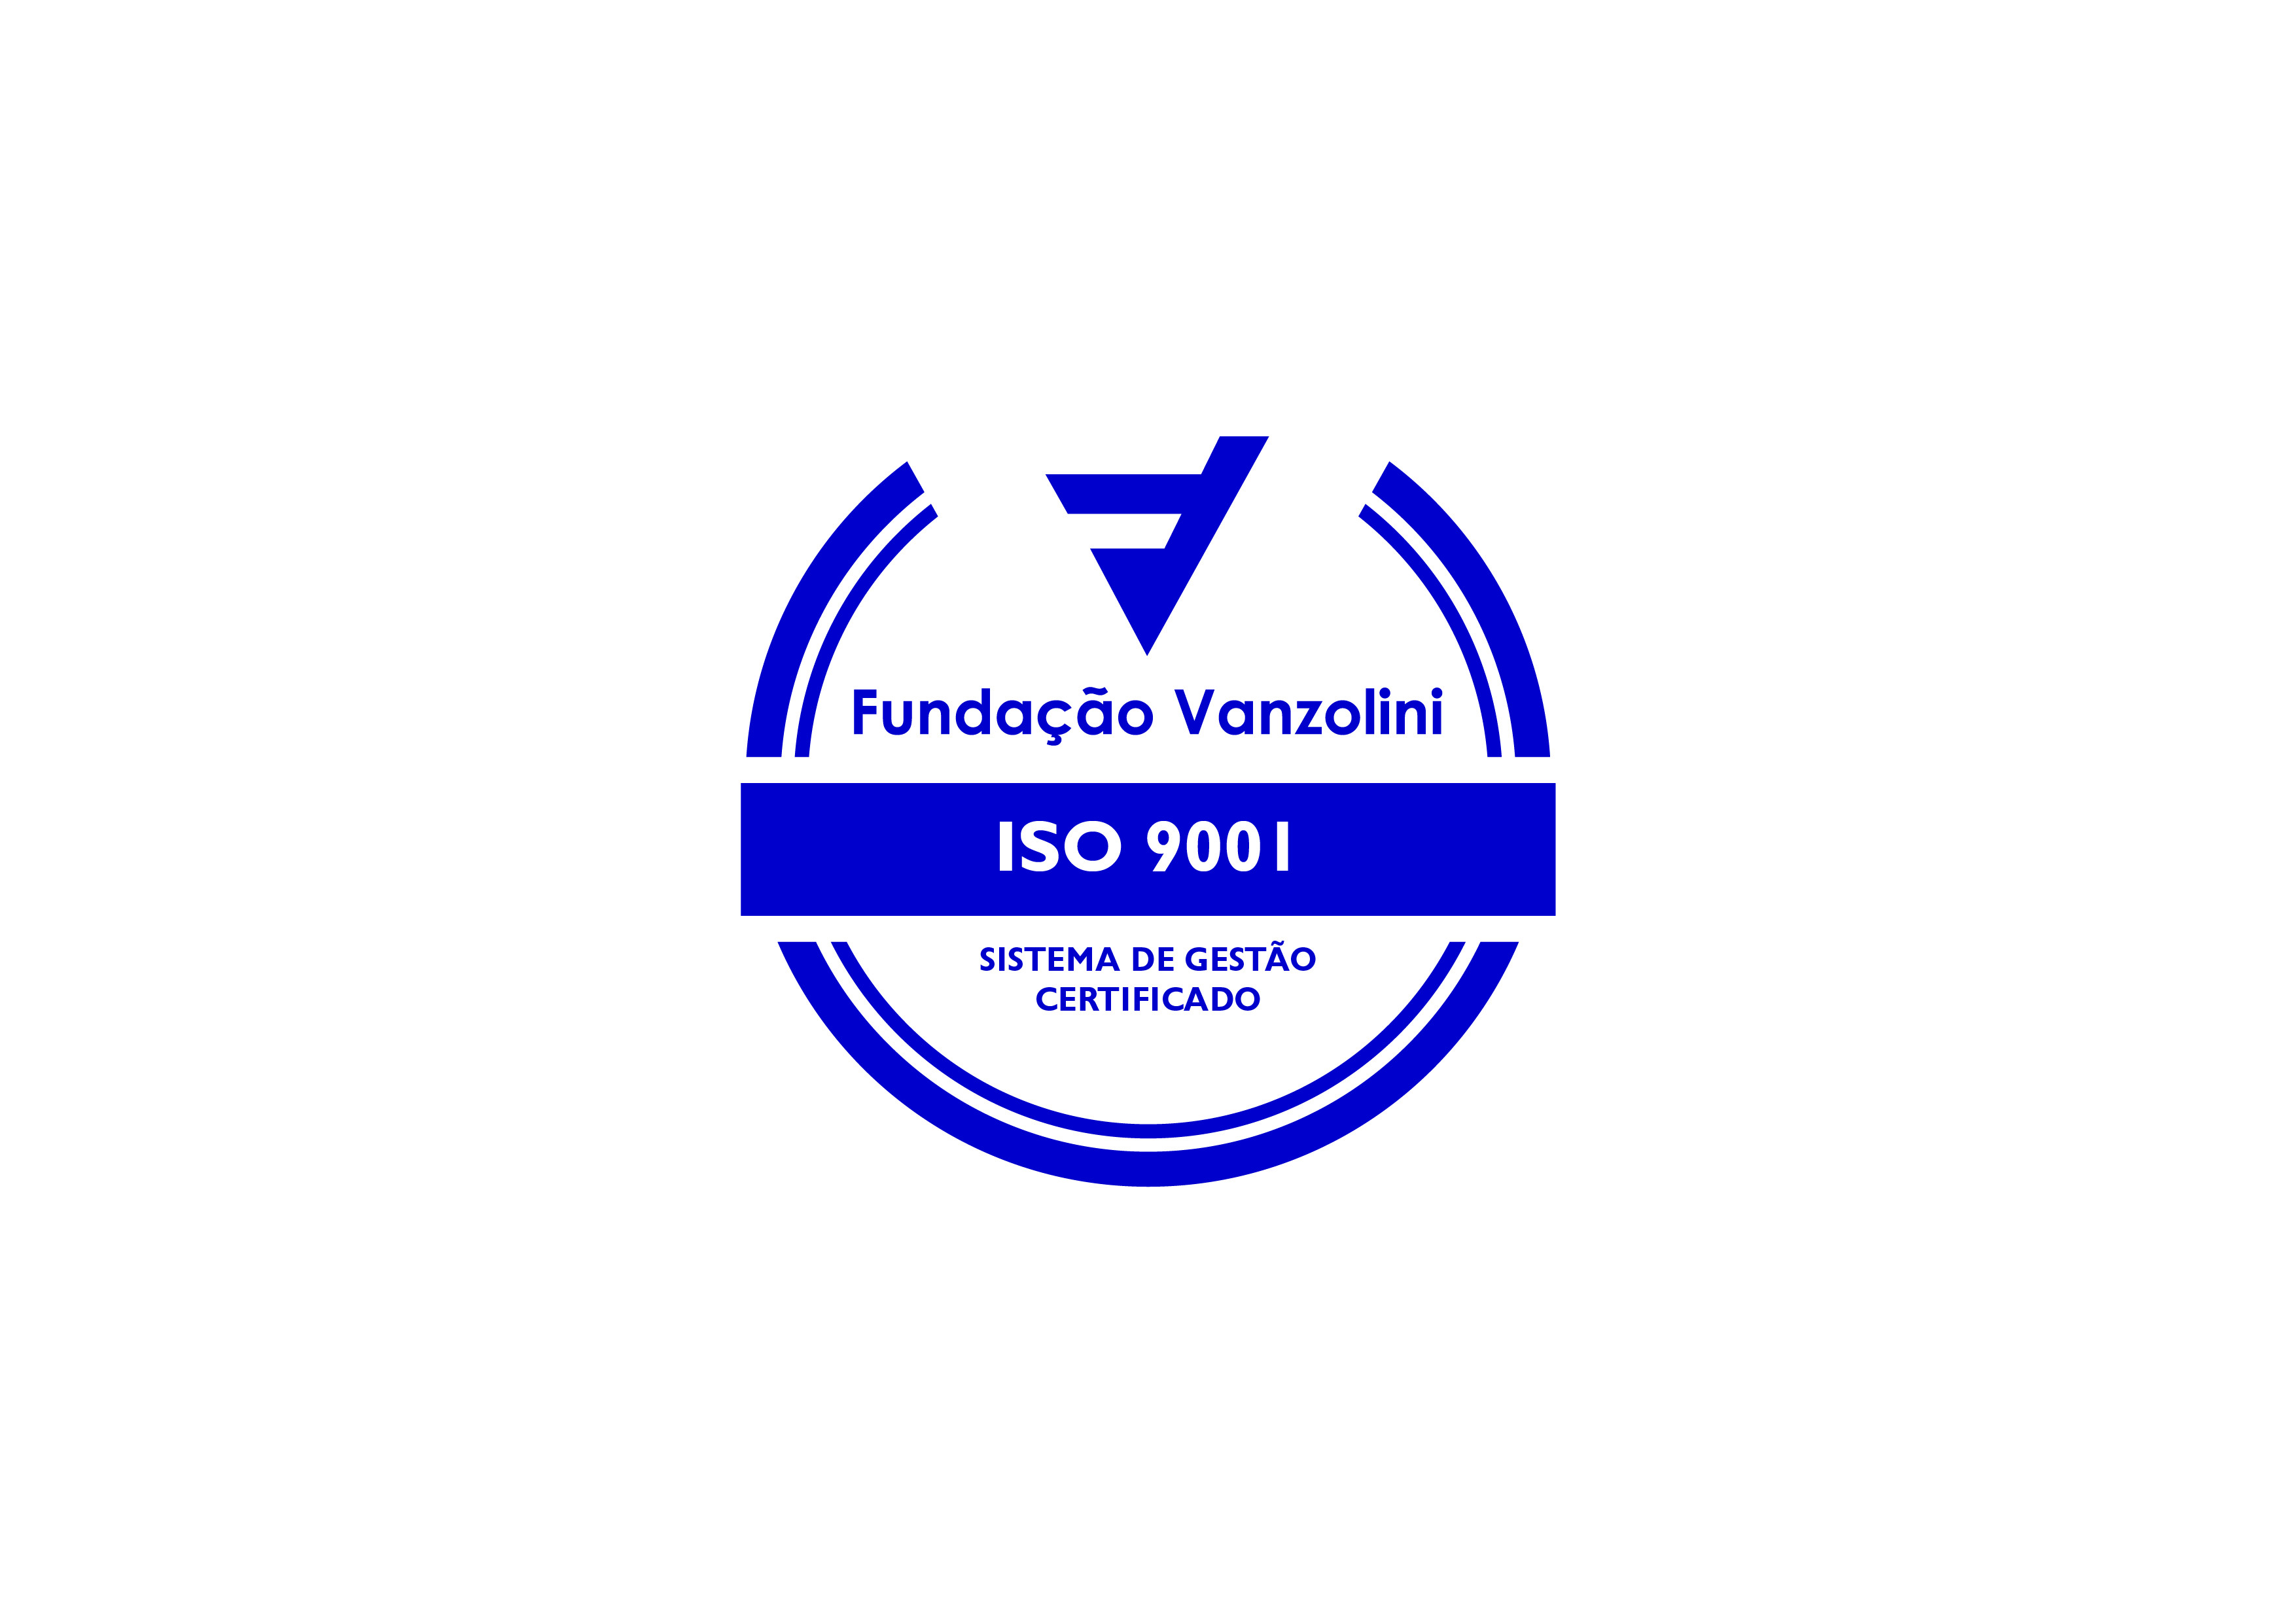 Fundação Vanzolini ISO 9001:2015, certificate SQ 22647